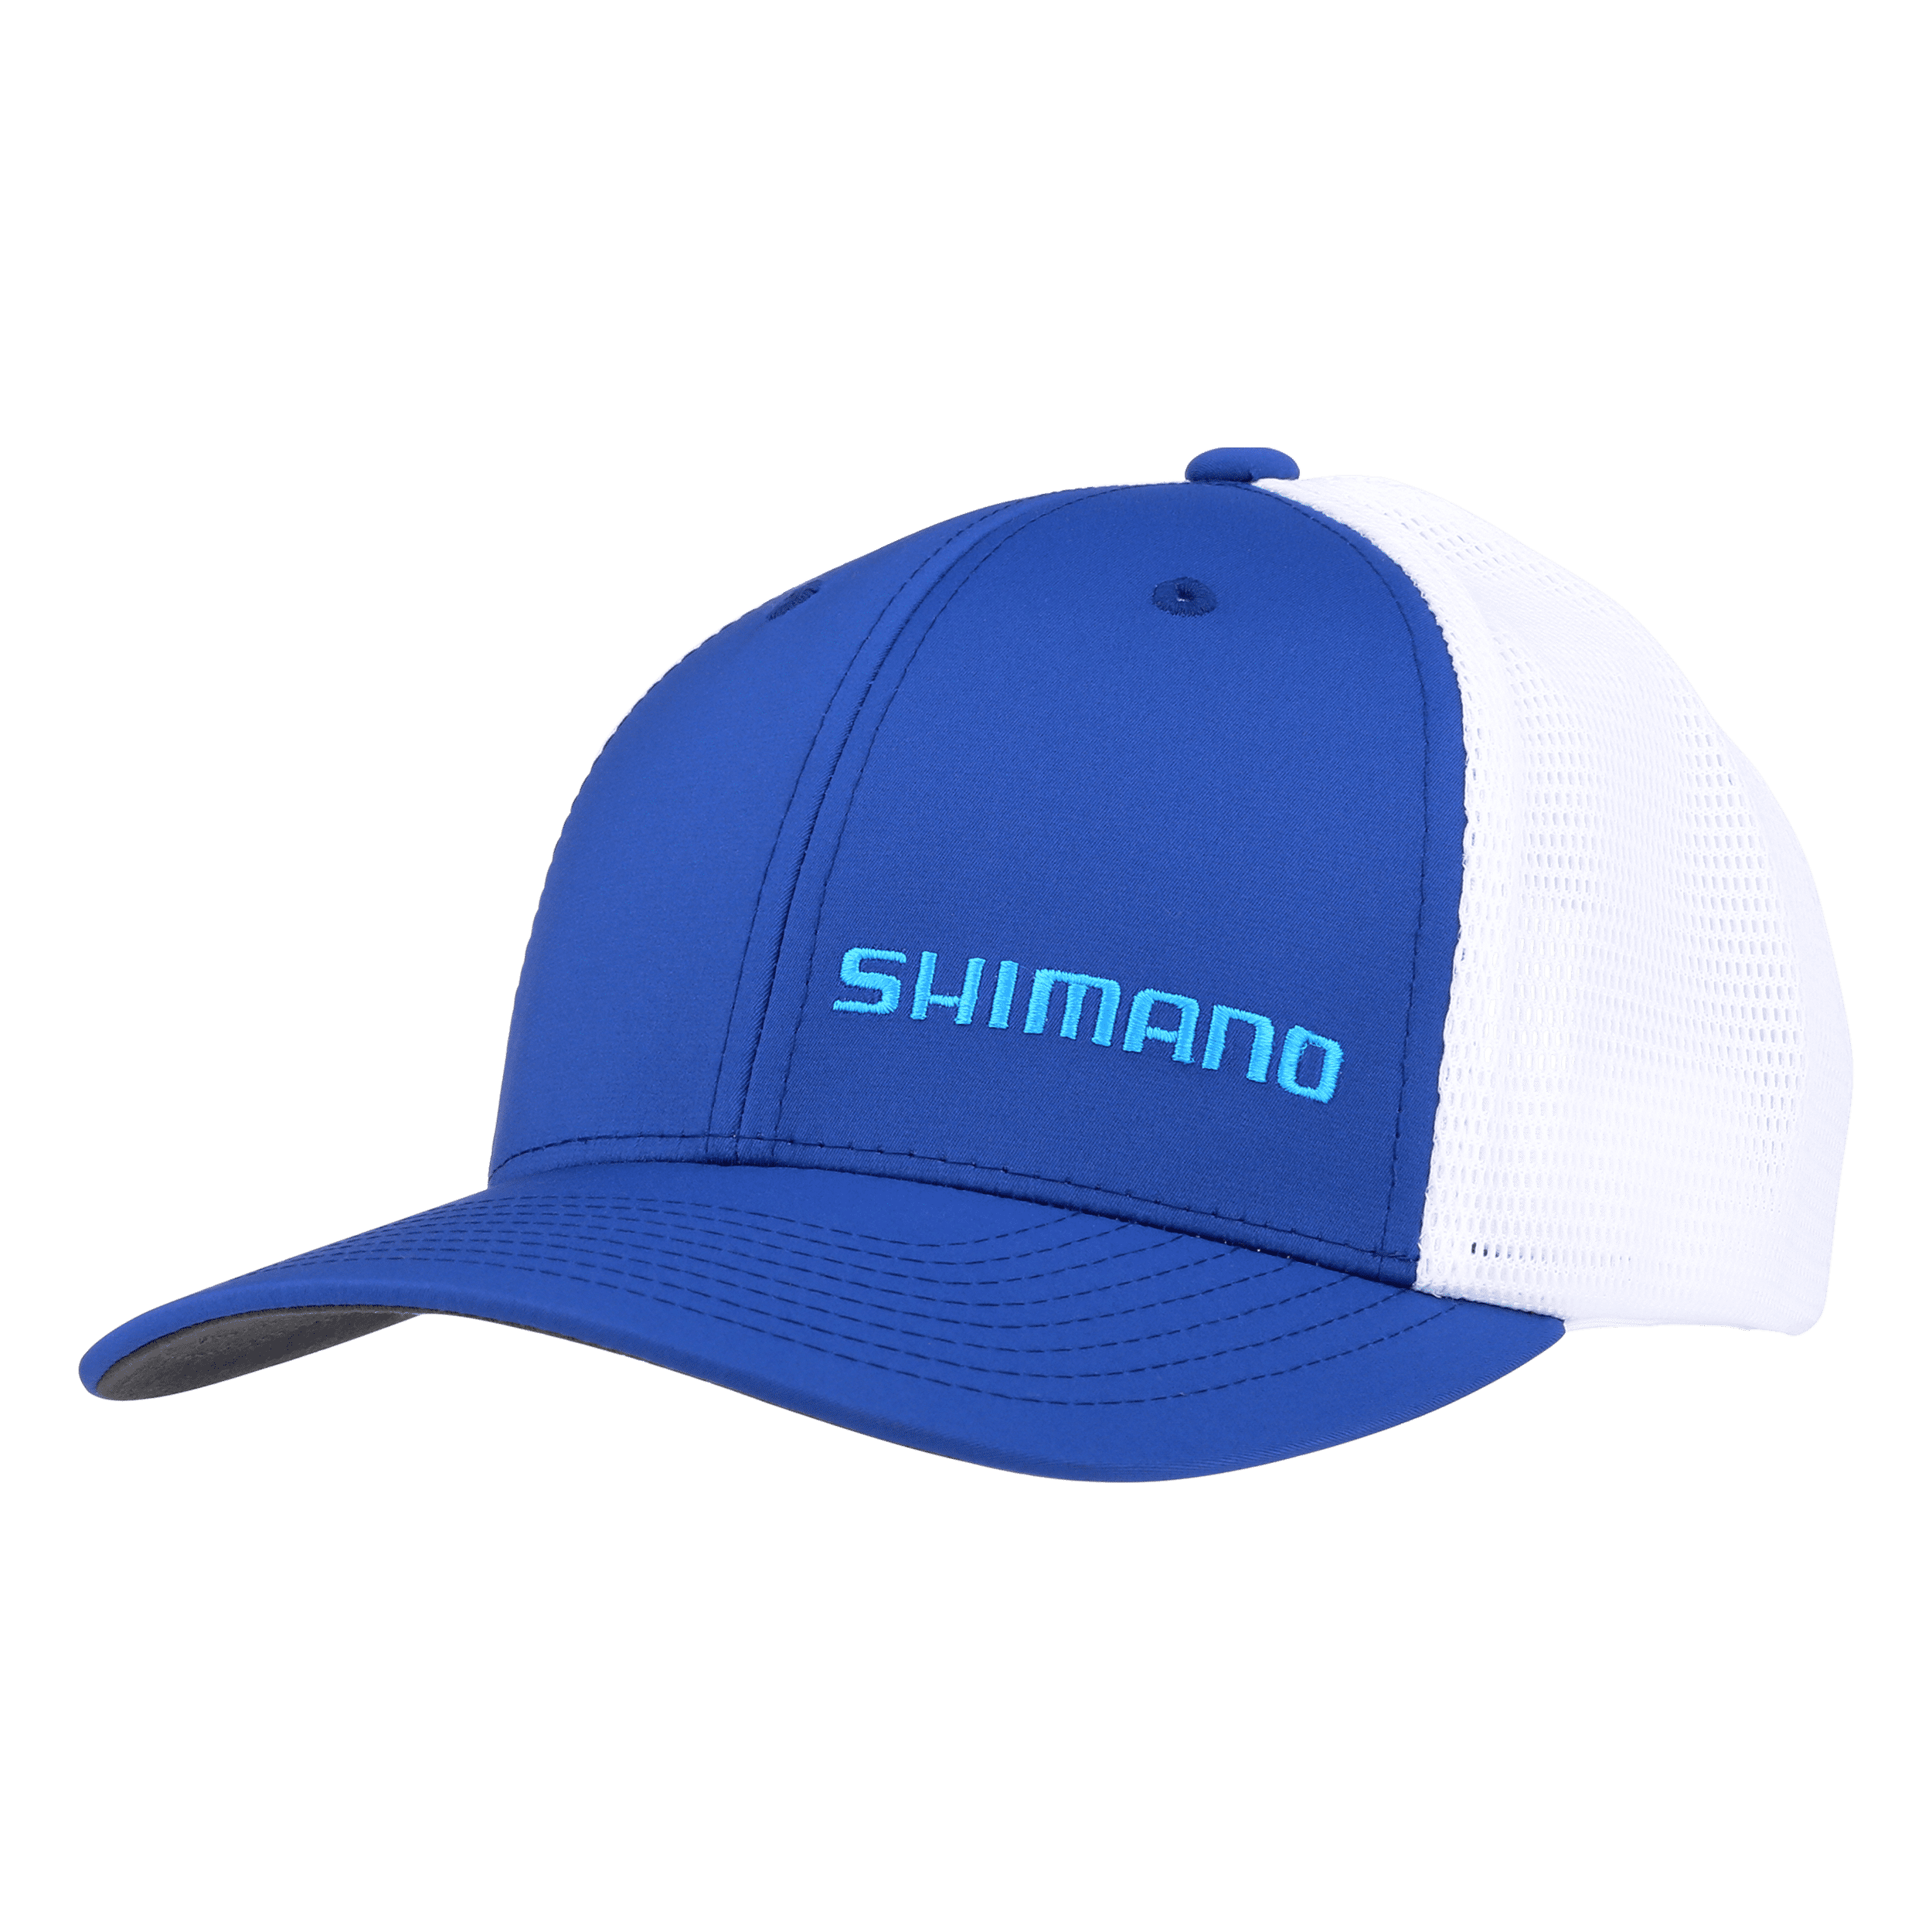 Fishouflage Camo Strike Cap- Crappie Fishing Hat (One Size)